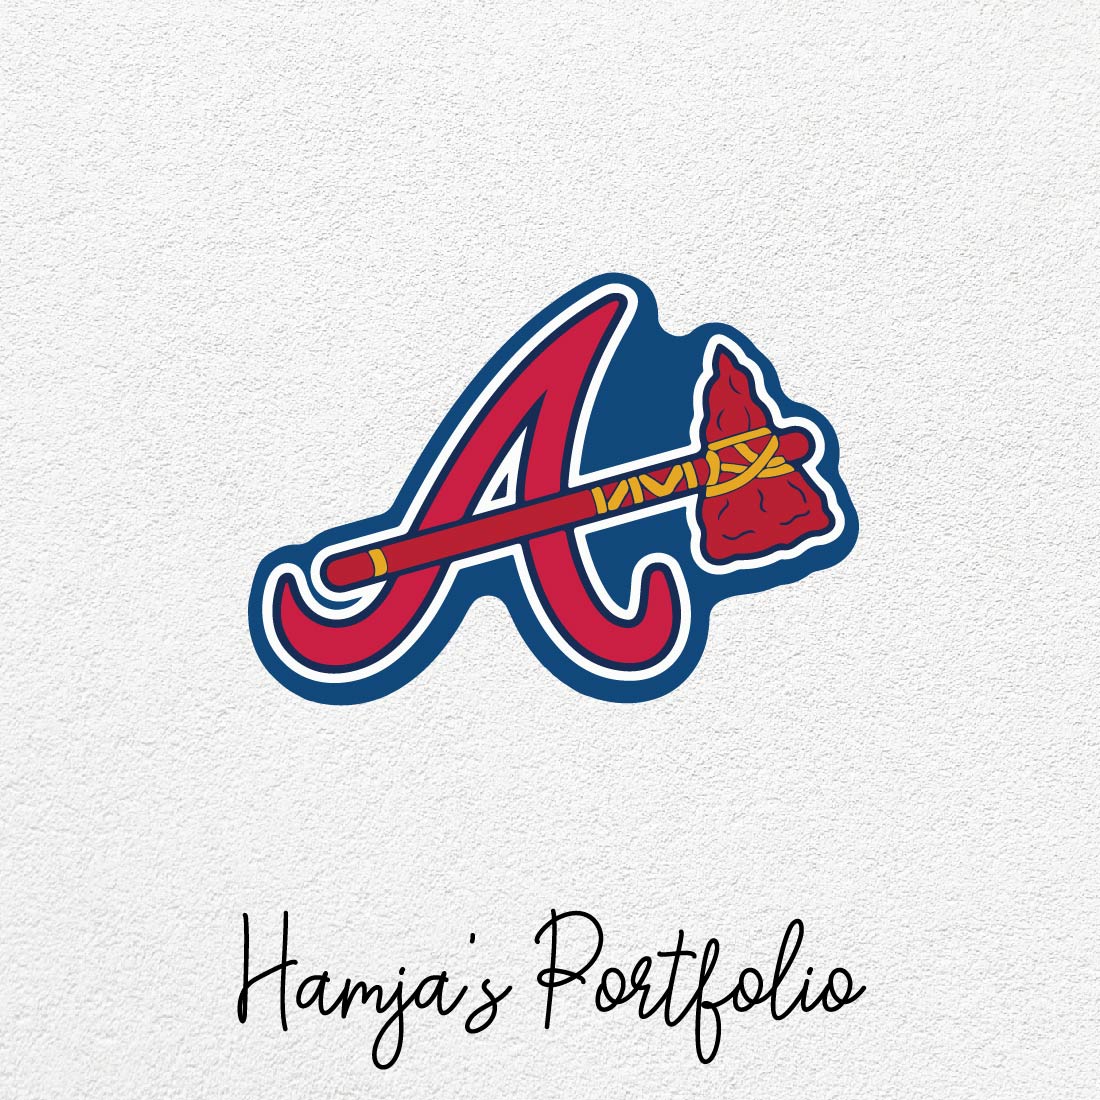 Atlanta Braves? - Logo 